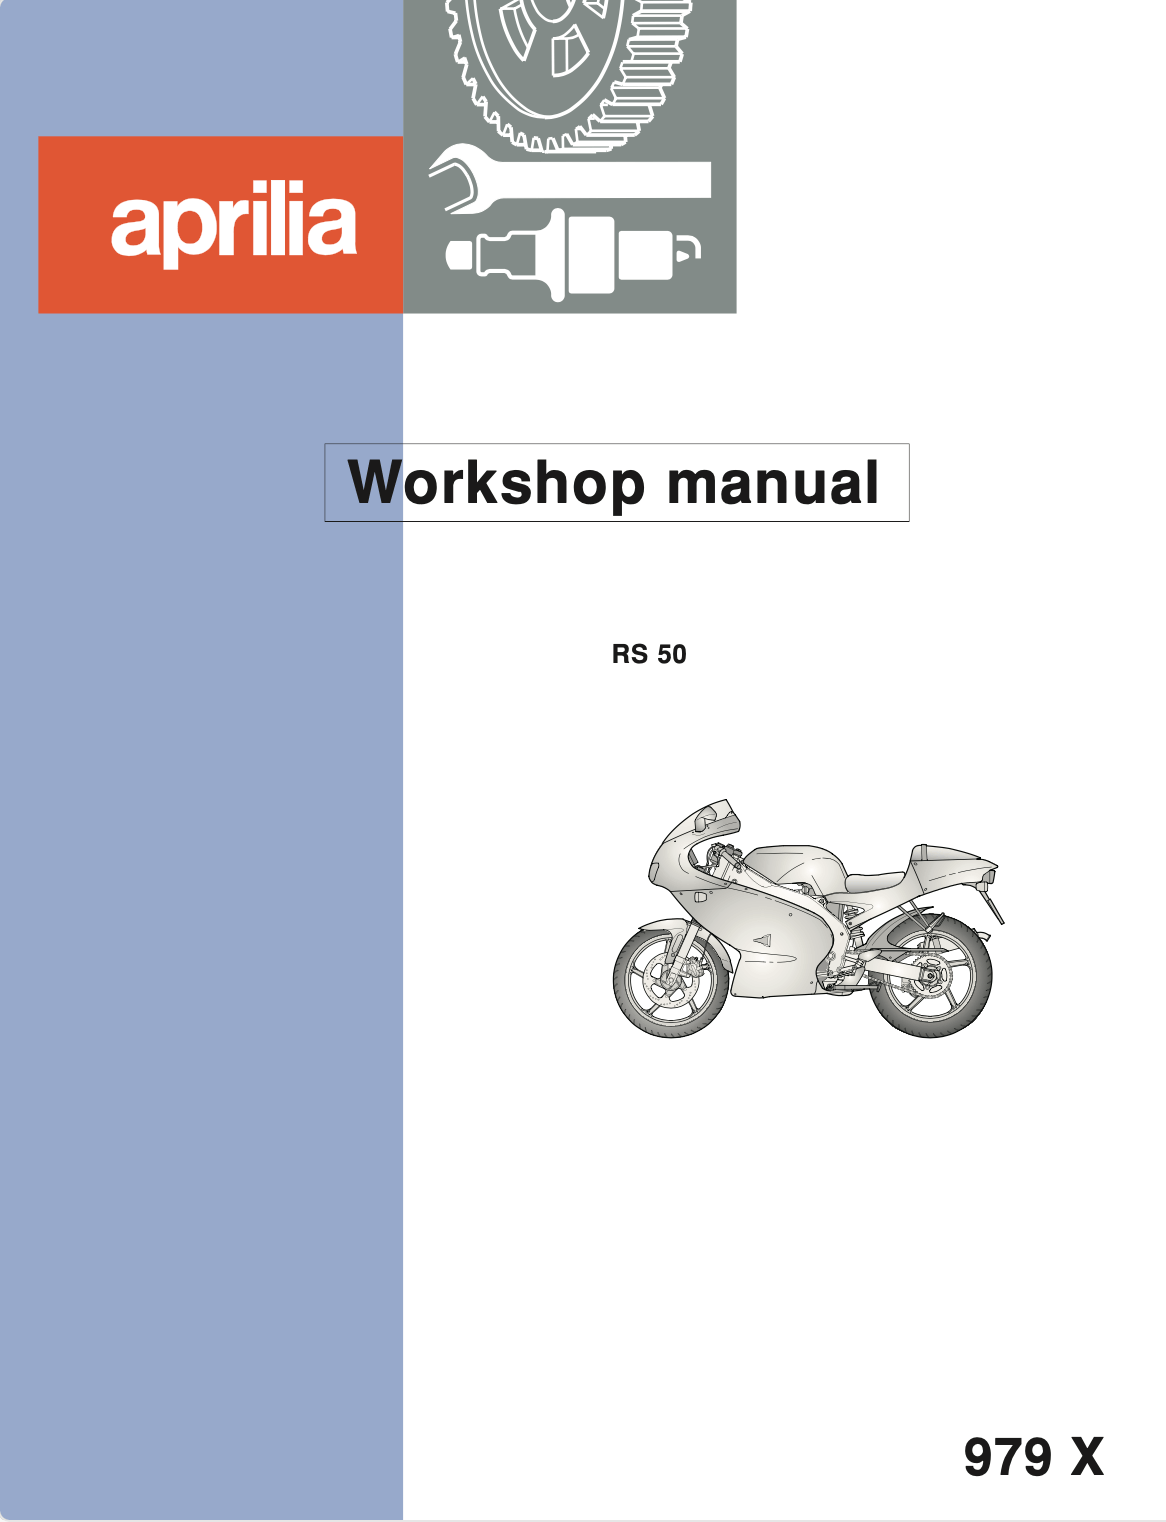 Aprilia RS 50 models 1997 to 2005 (2nd gen.) original motorcycle manufacturer's PDF repair manual download